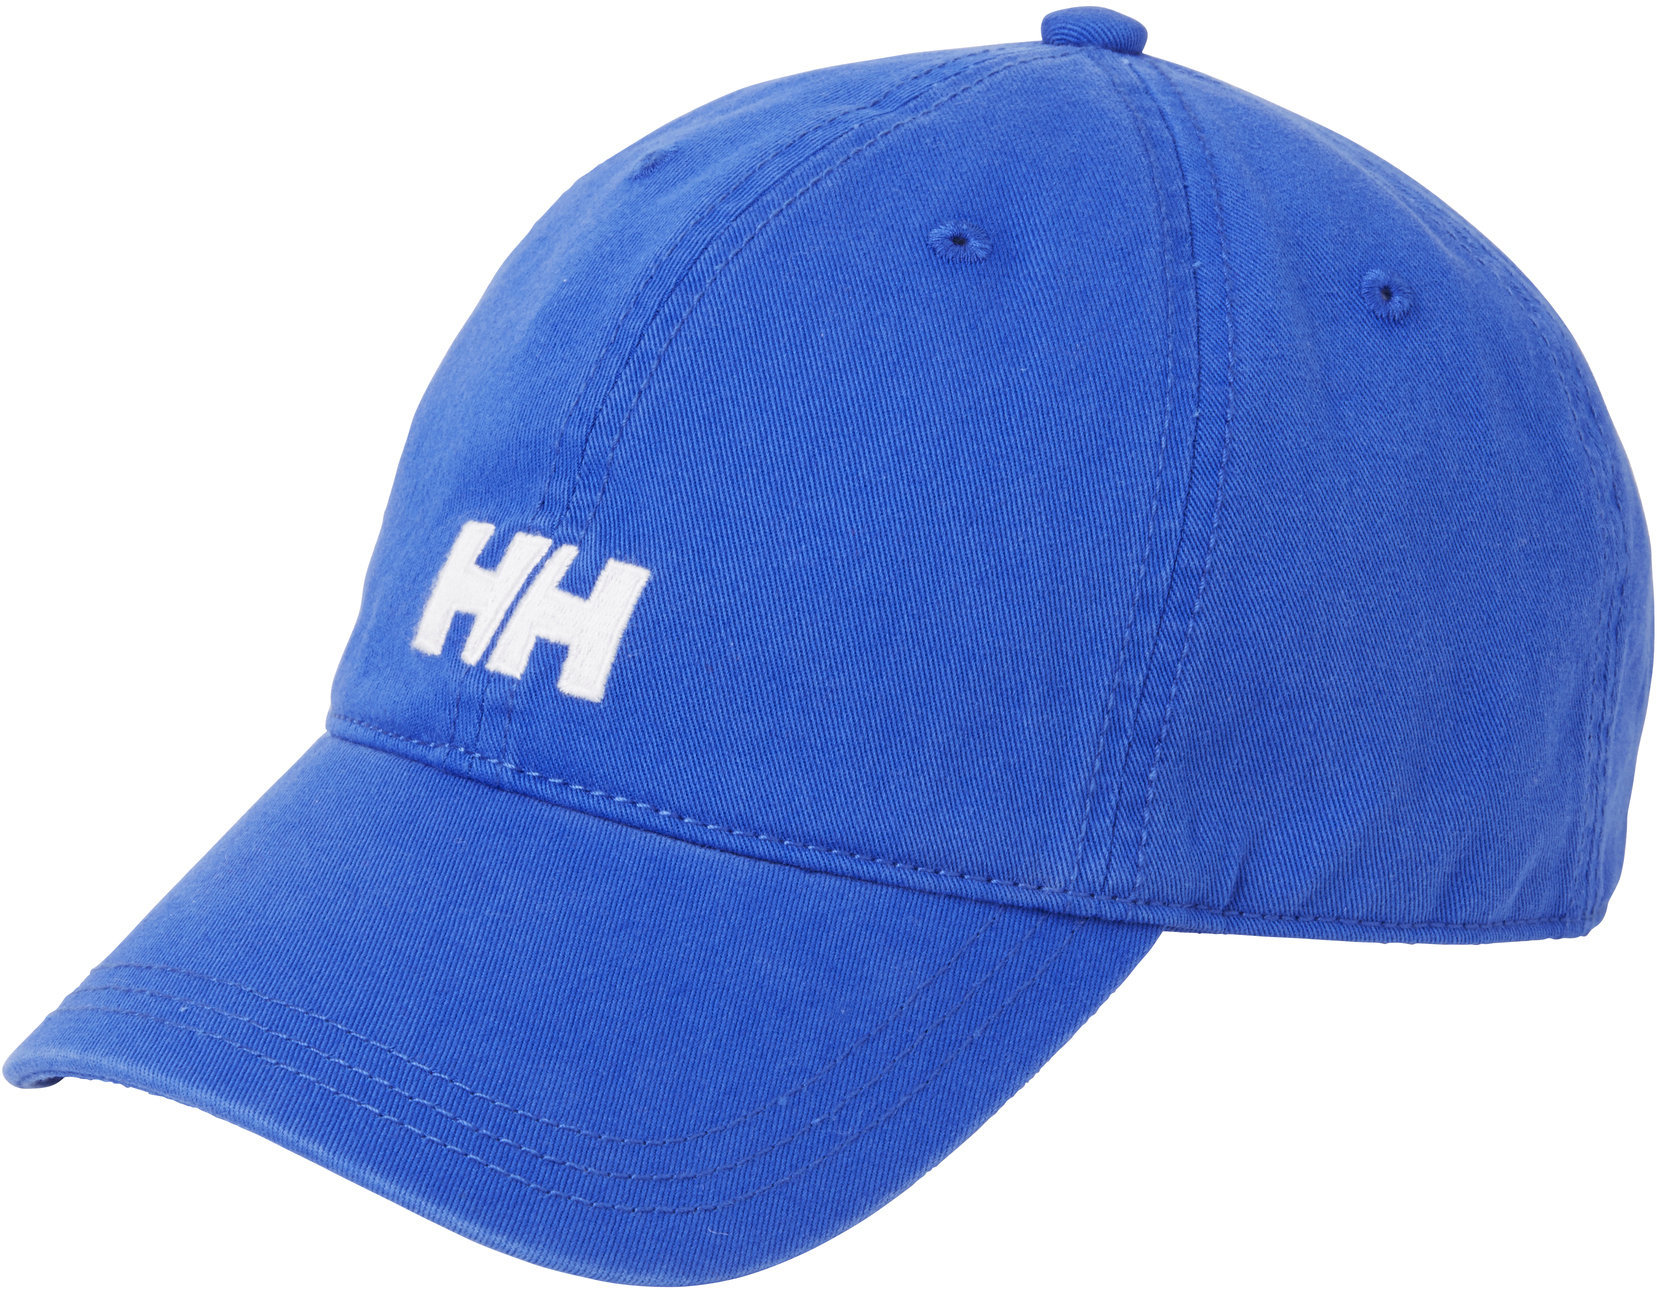 Kape Helly Hansen LOGO CAP OLYMPIAN BLUE